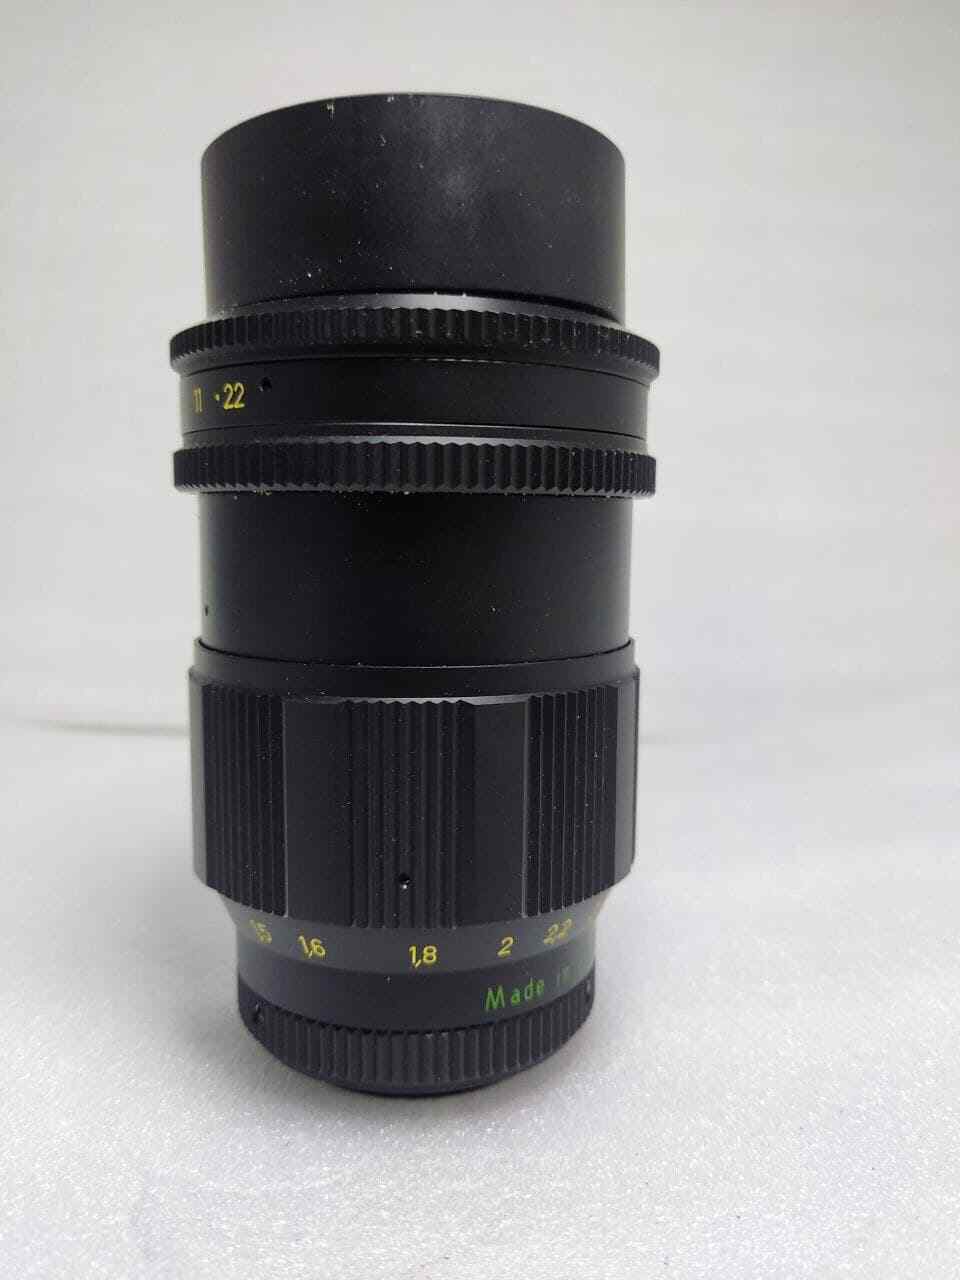 TAIR-11A 2.8/135 KMZ portrait telephoto Lens Zenit Pentax Praktica Sony Canon